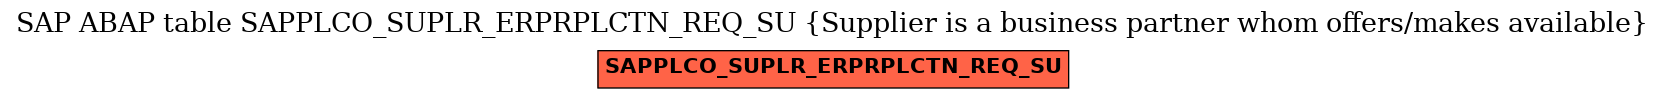 E-R Diagram for table SAPPLCO_SUPLR_ERPRPLCTN_REQ_SU (Supplier is a business partner whom offers/makes available)